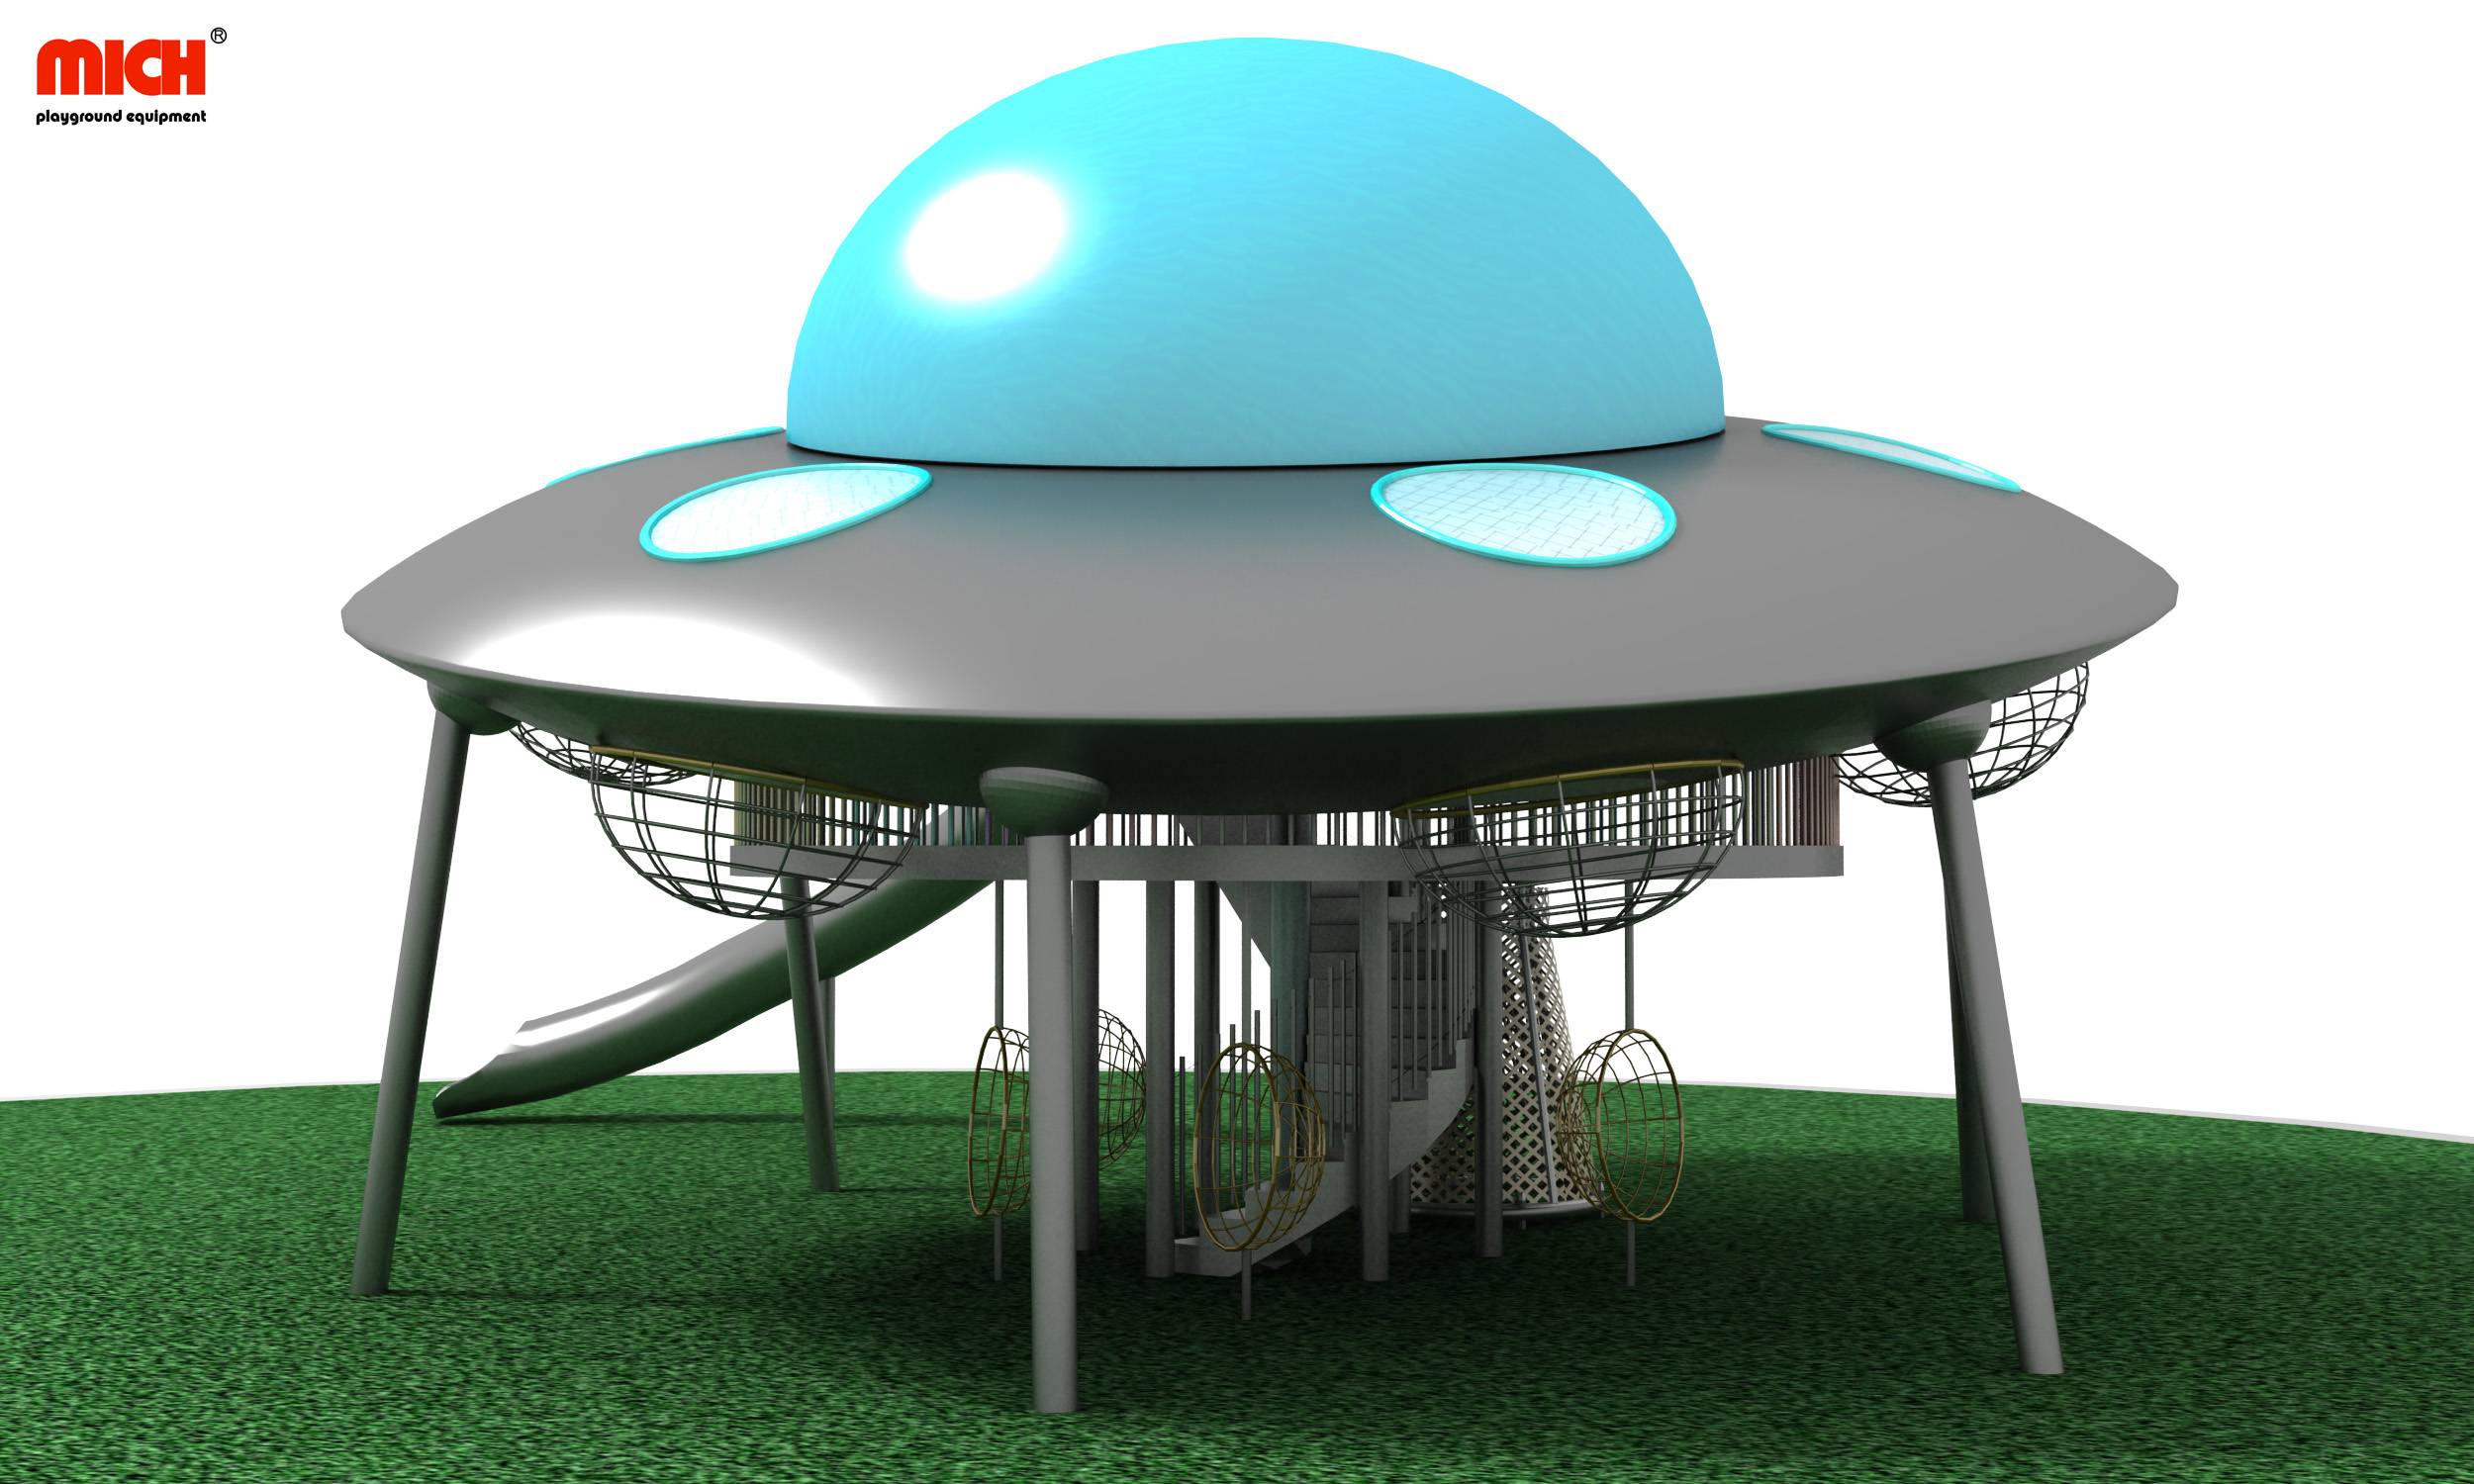 UFO Spaceship Unique Outdoor Play Structure